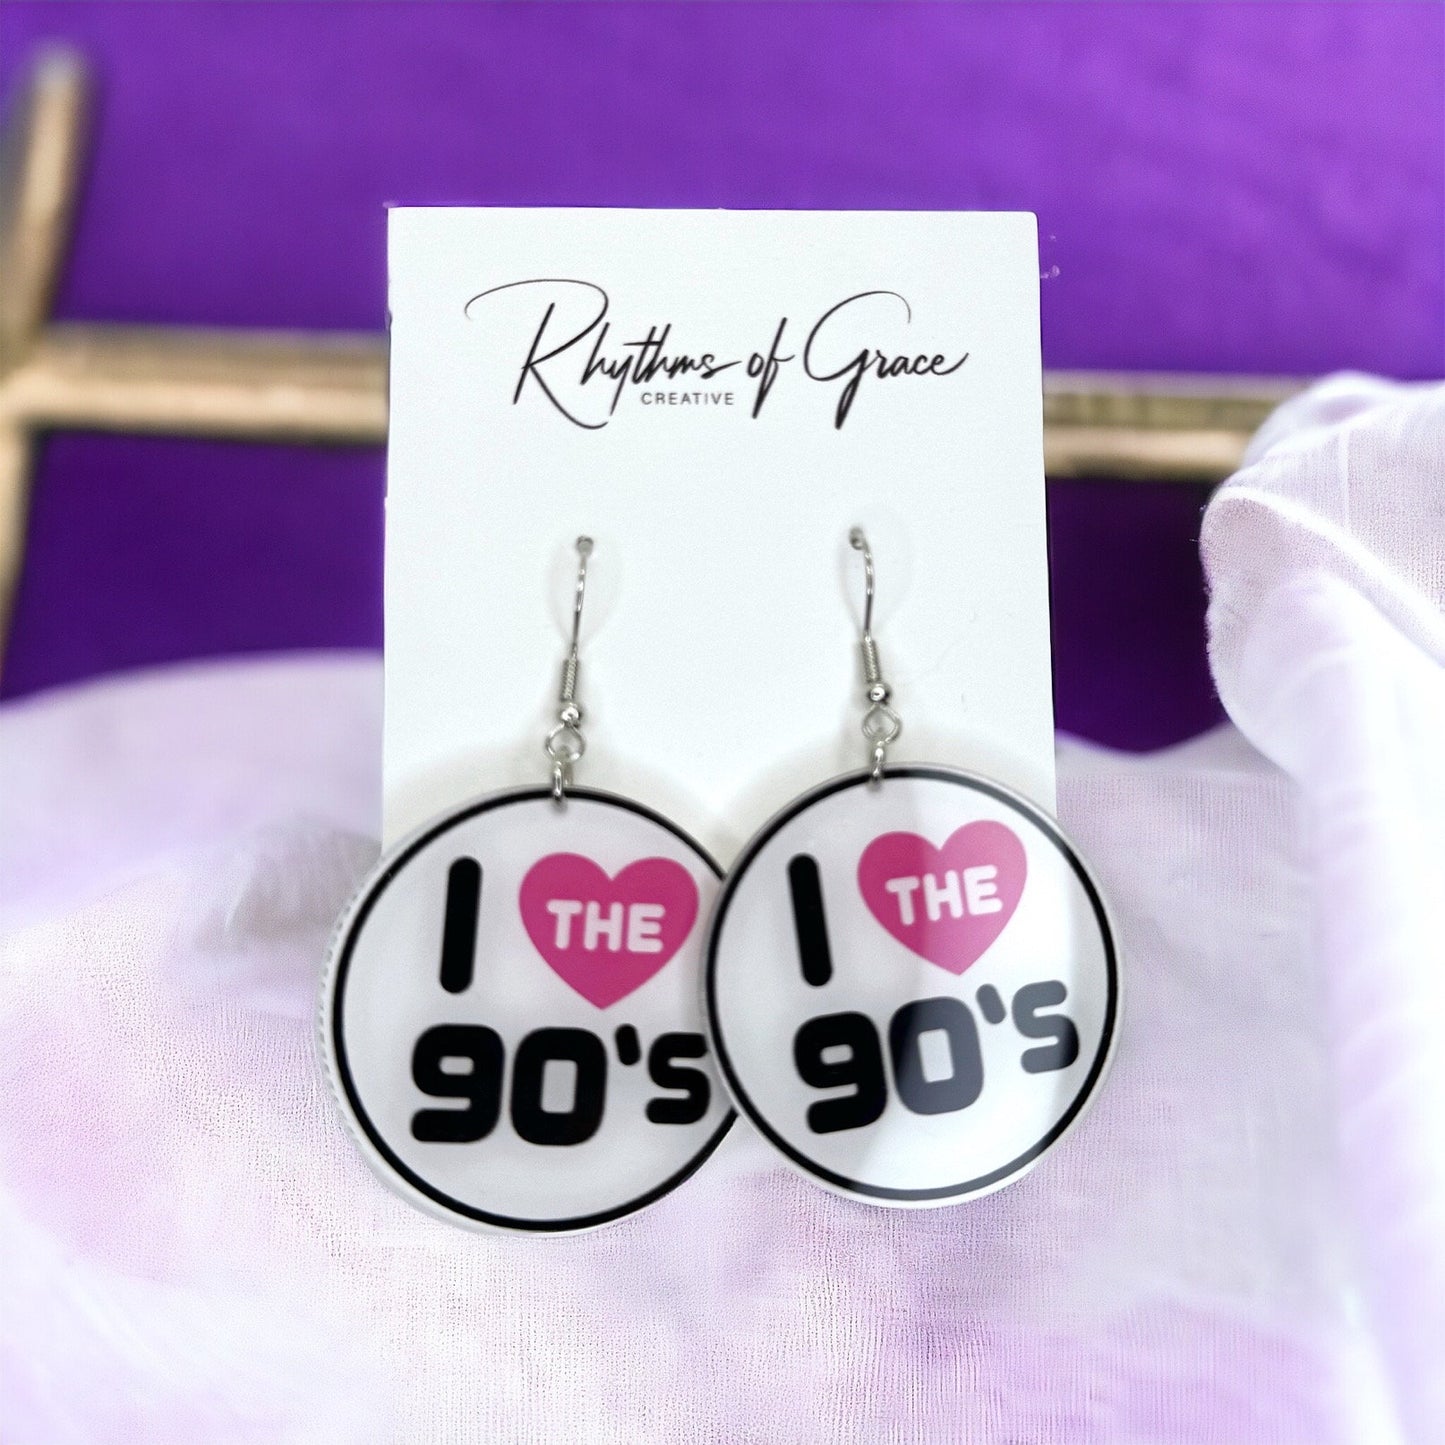 90’s Earrings - I Love the Nineties, Handmade Earrings, Retro Earrings, Nineties Accessories, Nineties Earrings, 90’s Accessories, Decade